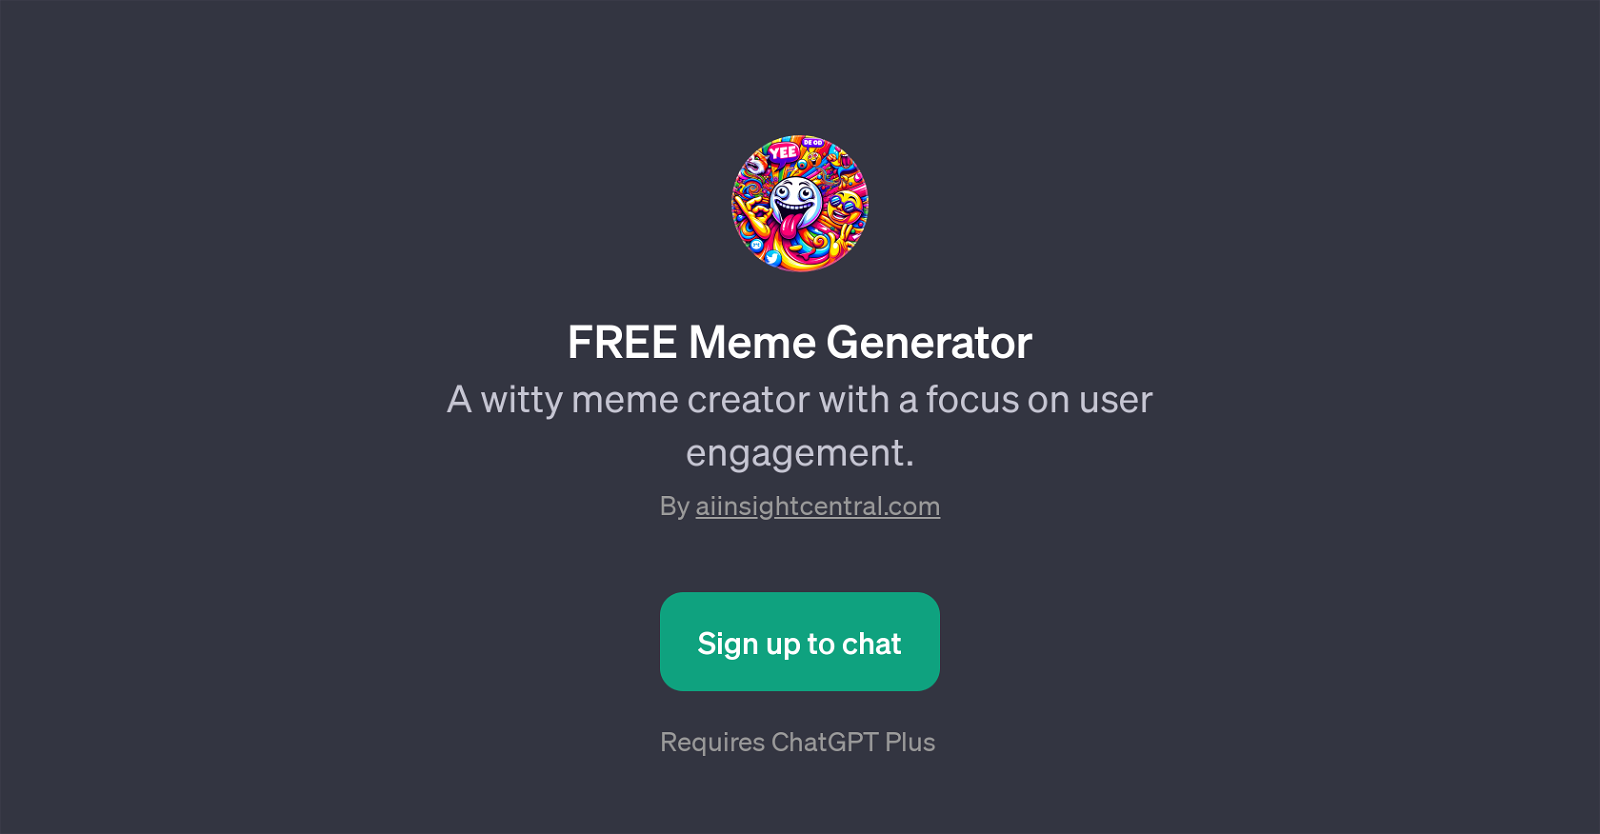 FREE Meme Generator website